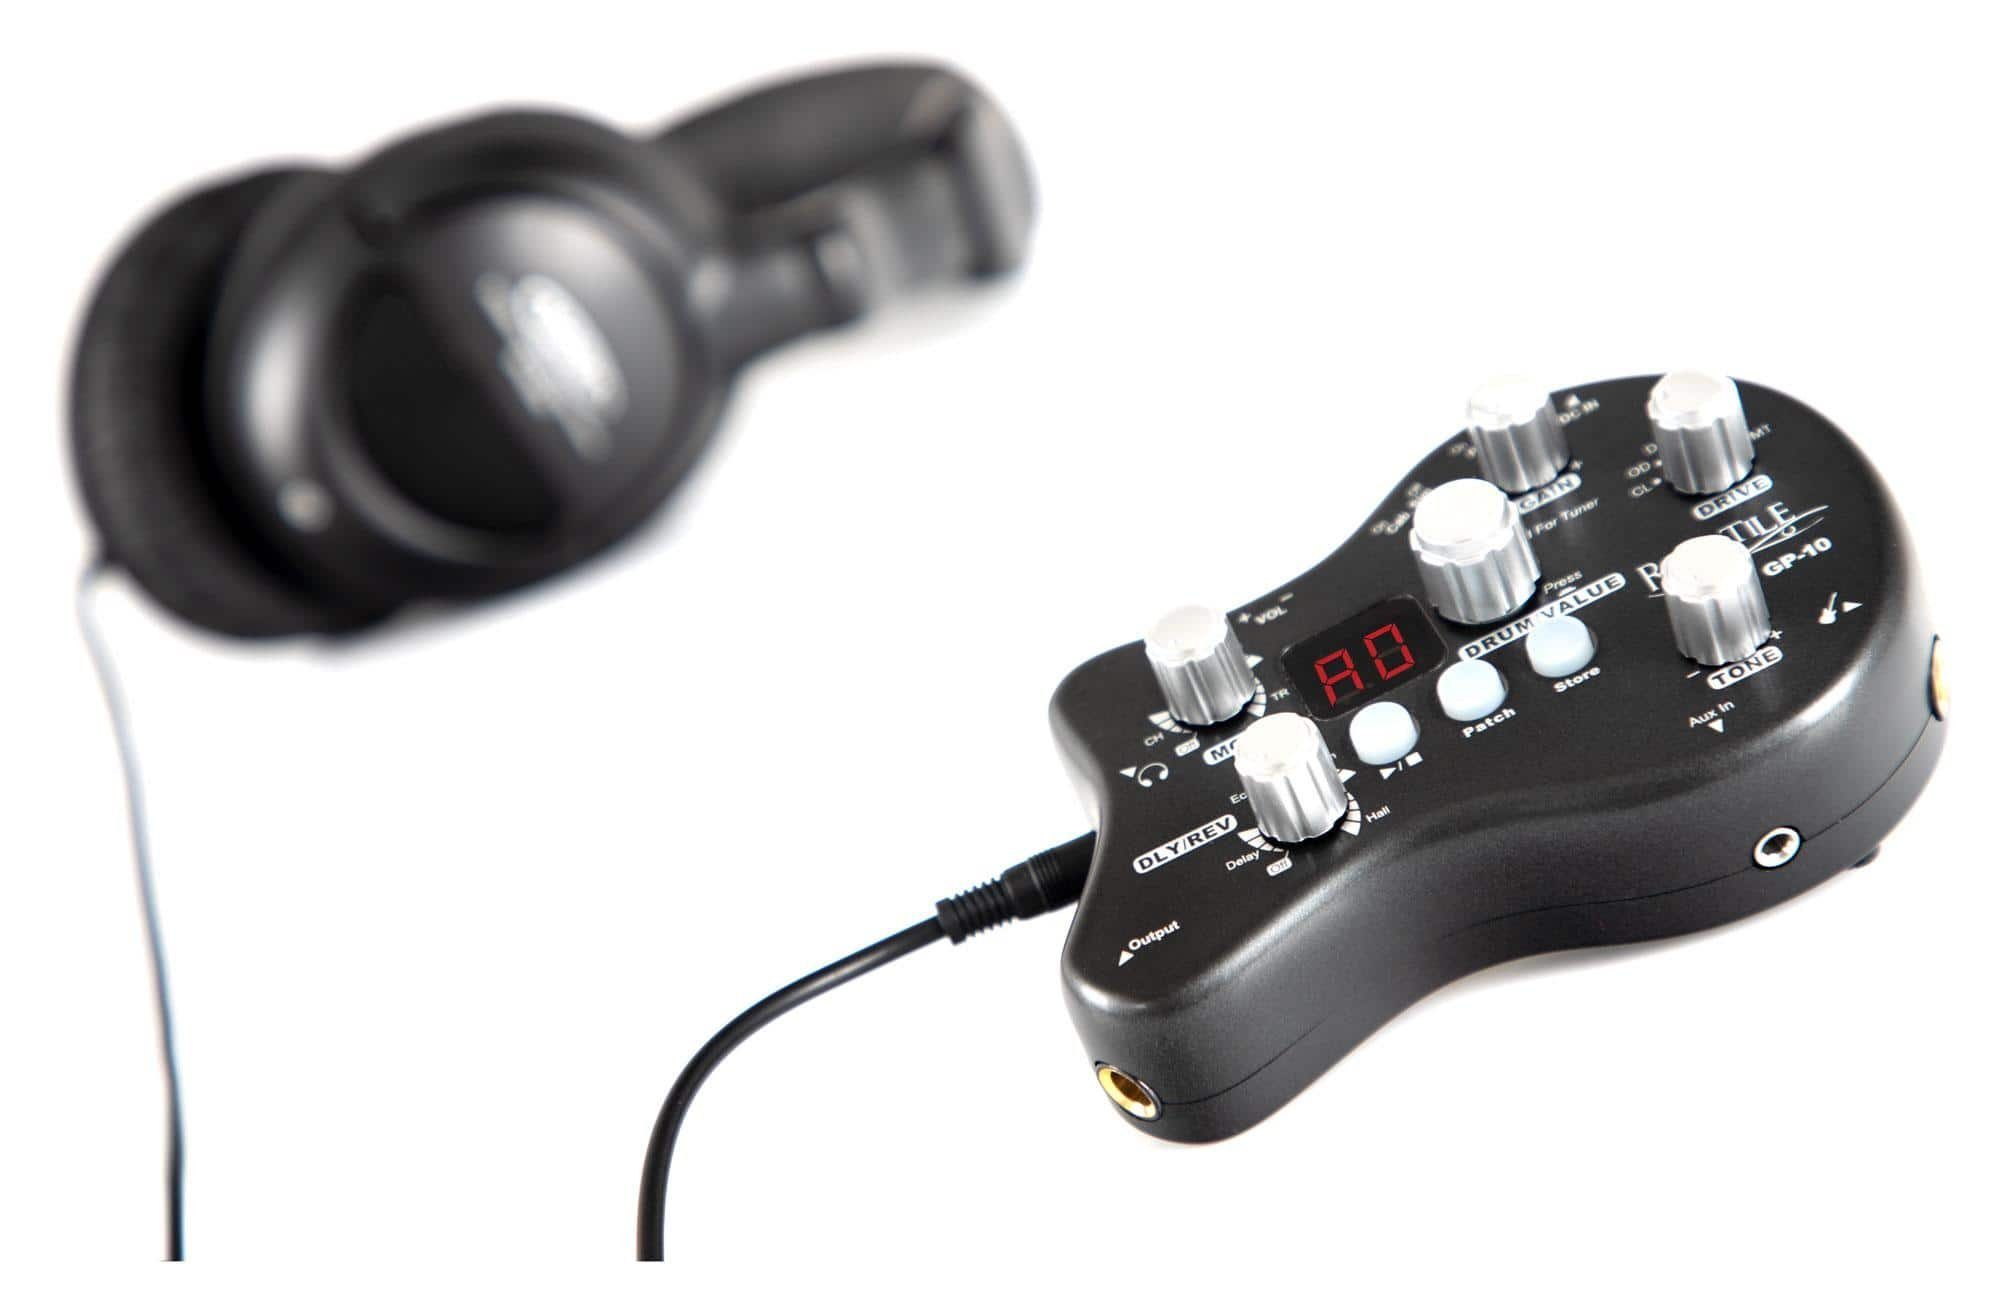 Rhythmen) Multieffektgerät) GP-10 und mit Drum-Loop (tragbarer Player (8-Effekttypen Kopfhörerverstärker Practice Rocktile Kit & Kopfhörer-Verstärker 40